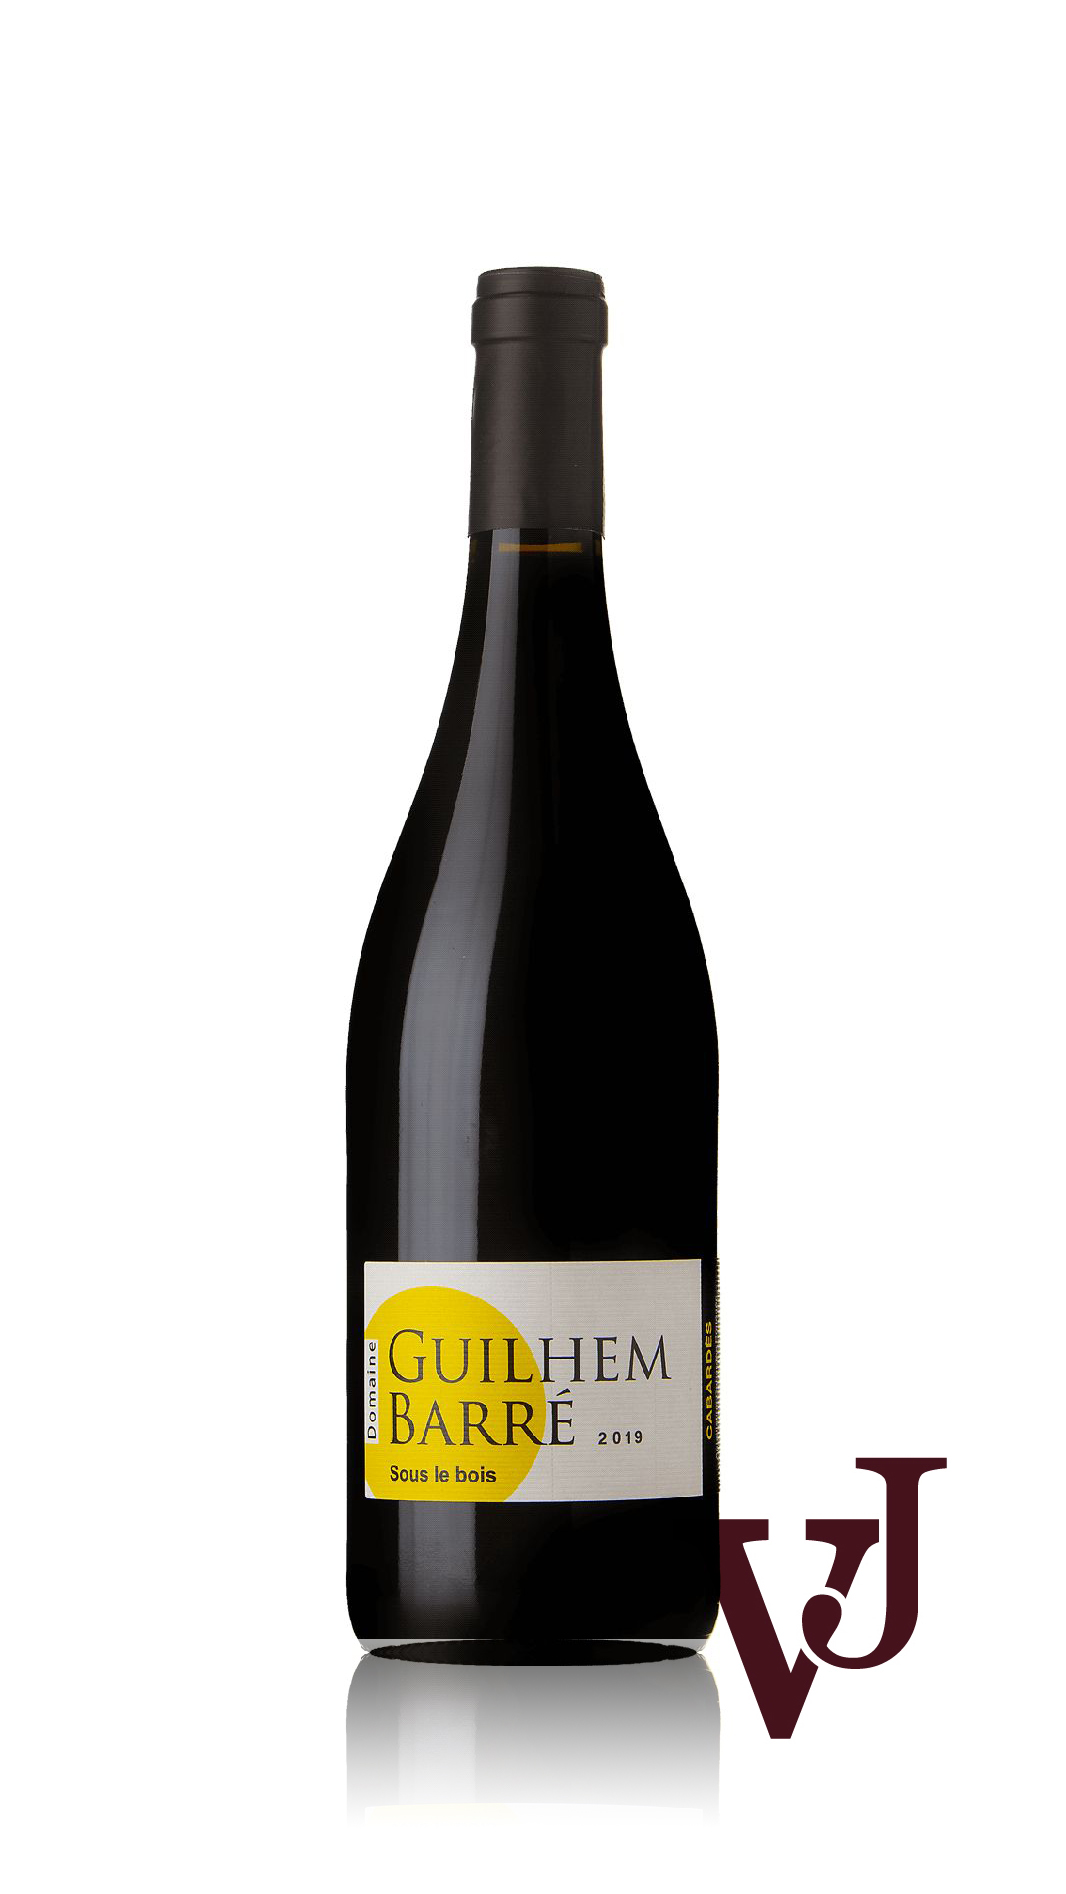 Rött Vin - Sous le bois Guilhem Barré 2019 artikel nummer 9340101 från producenten Domaine Guilhem Barré från området Frankrike